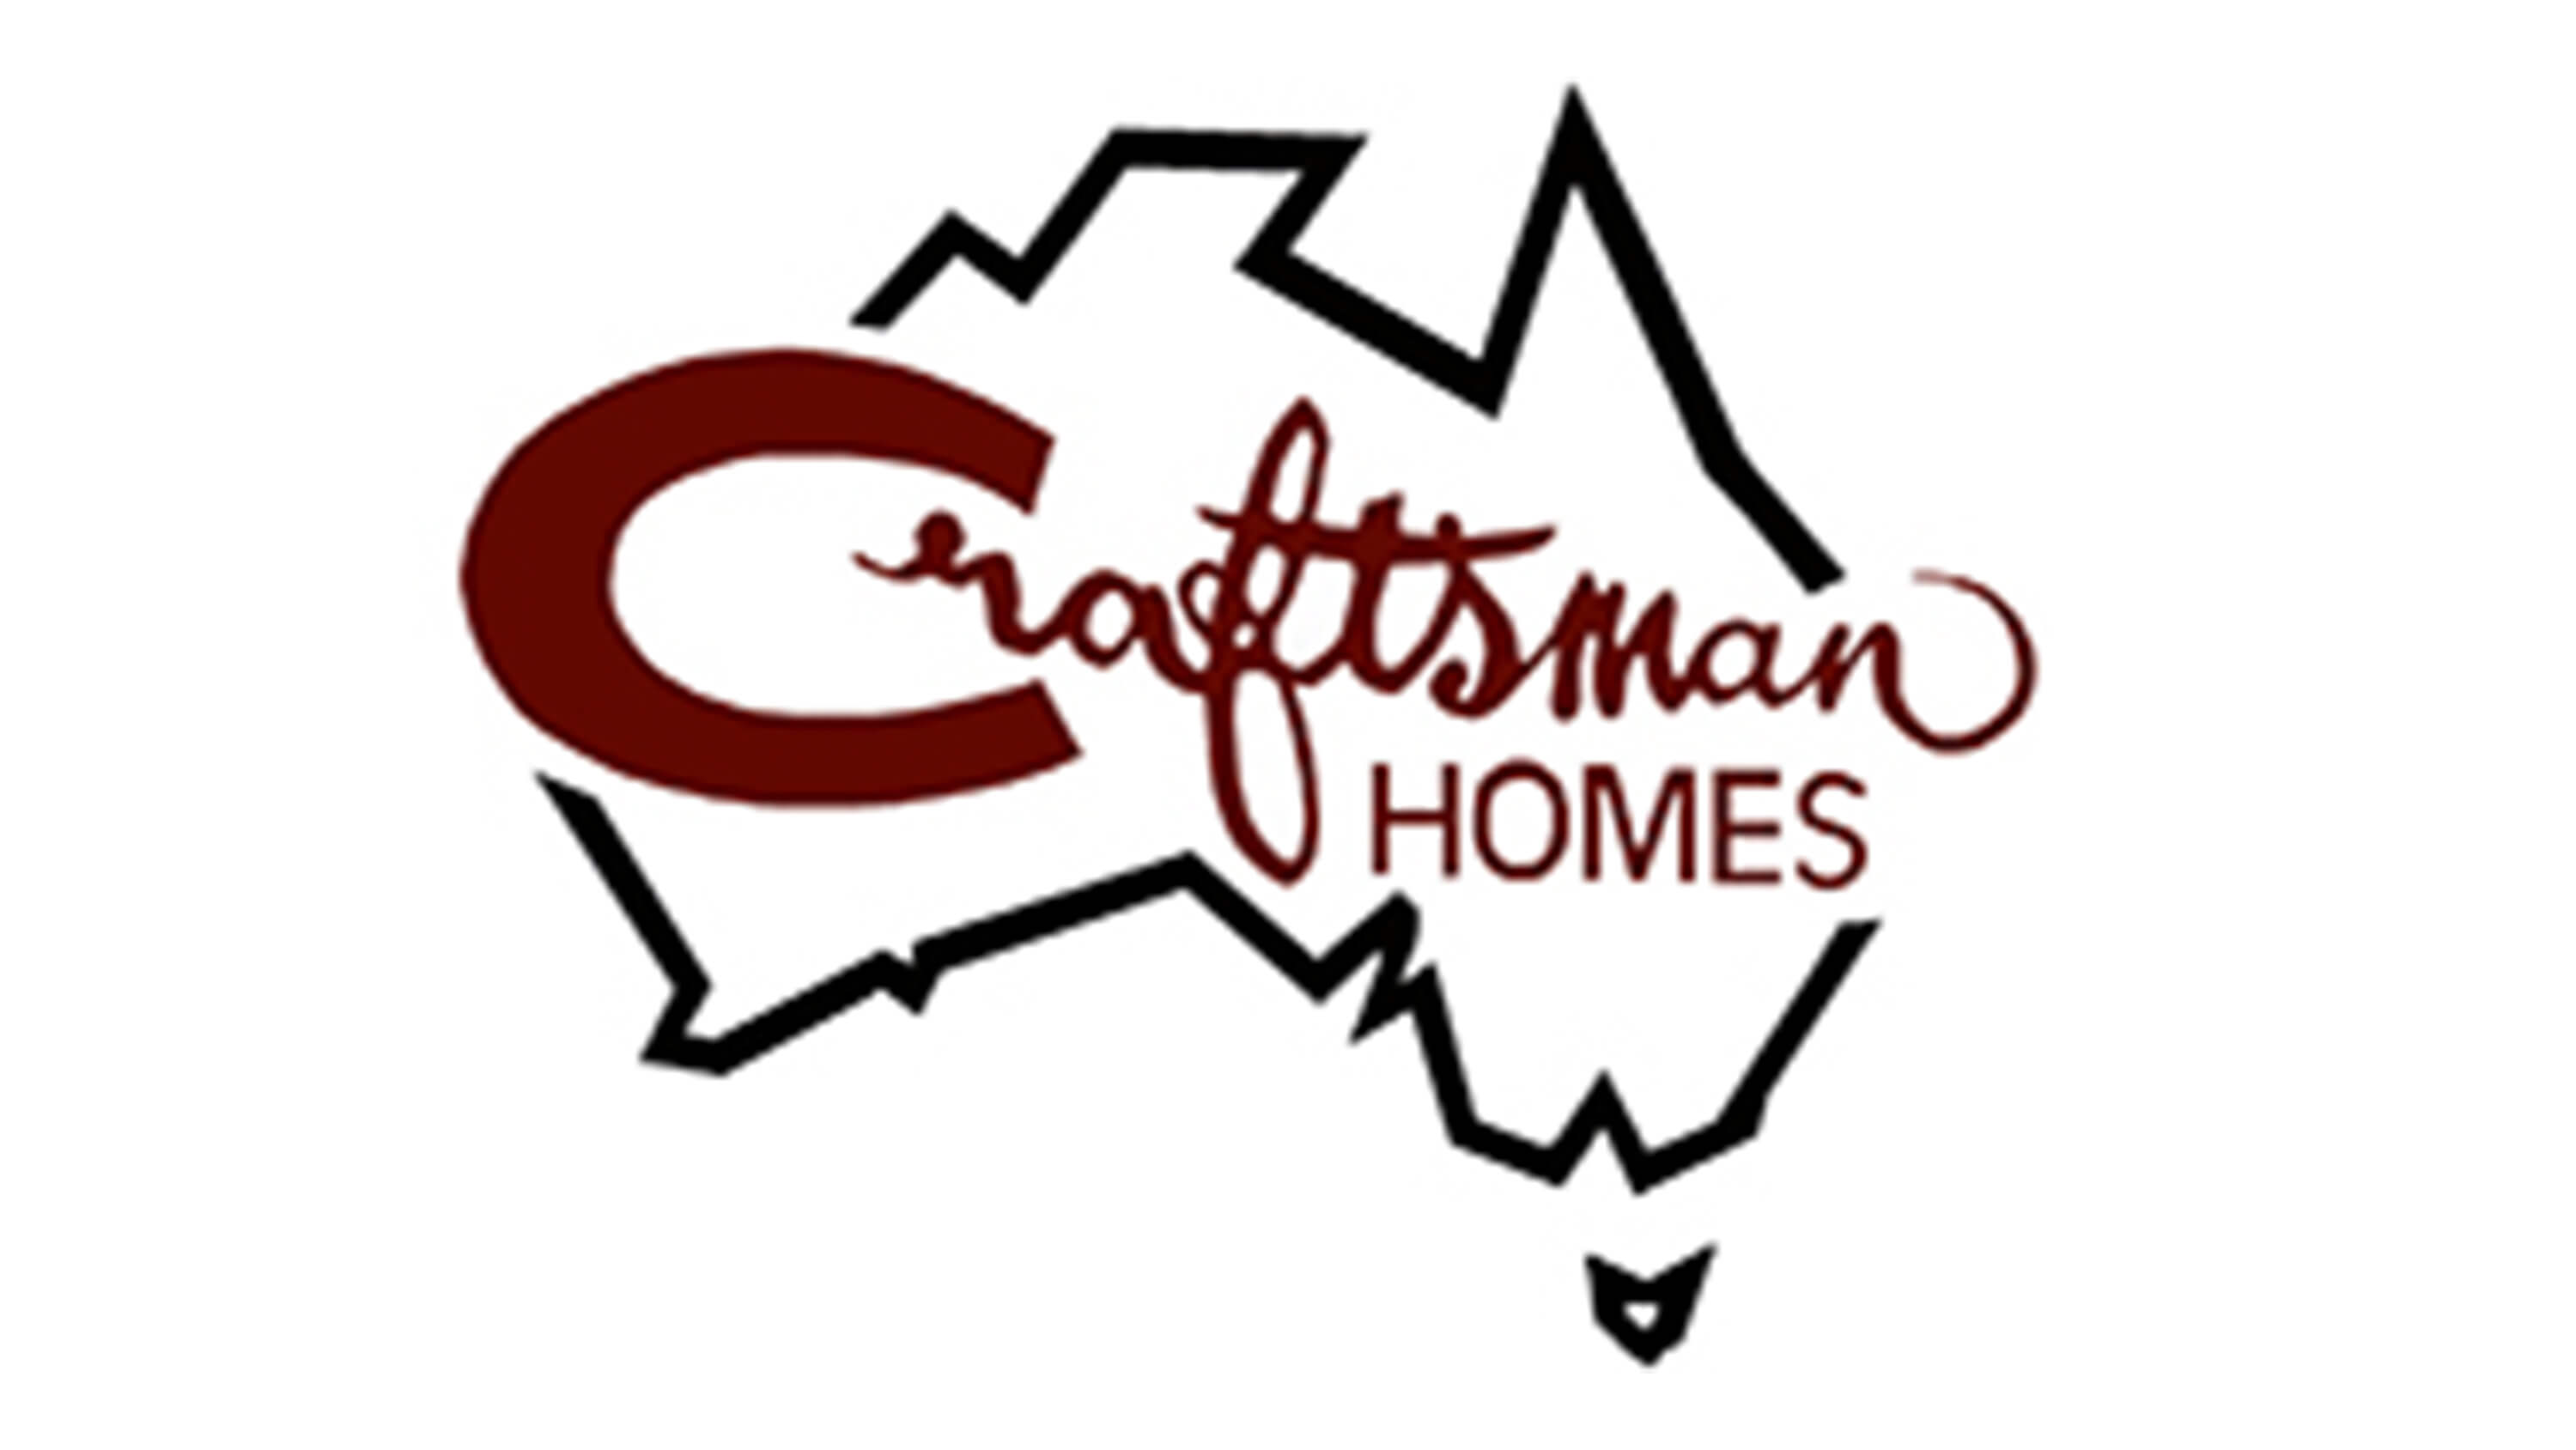 Craftsman homes logo